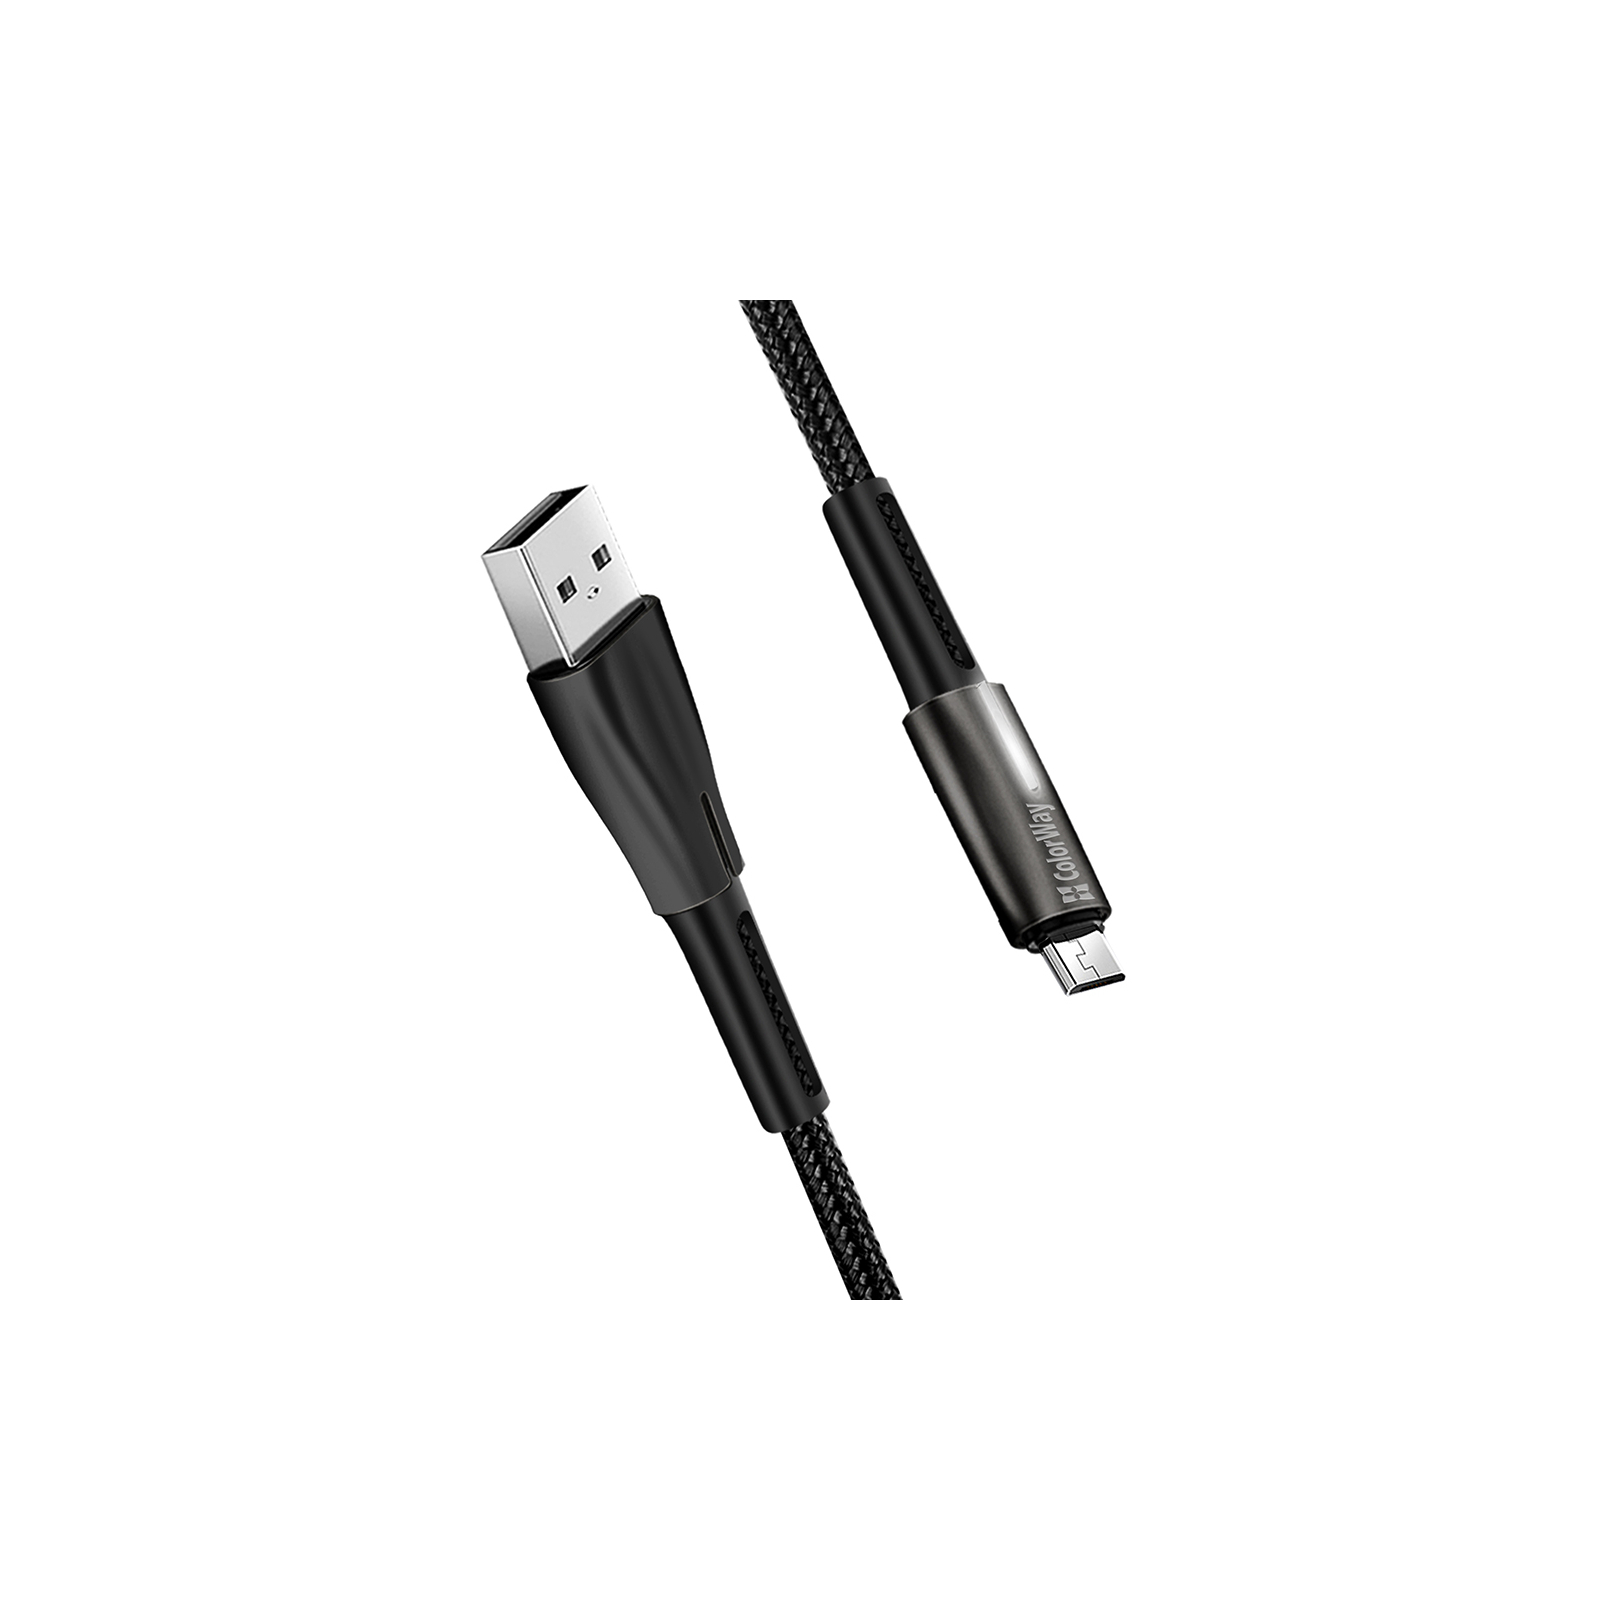 Дата кабель USB 2.0 AM to Micro 5P 1.0m zinc alloy + led black ColorWay (CW-CBUM035-BK) изображение 5